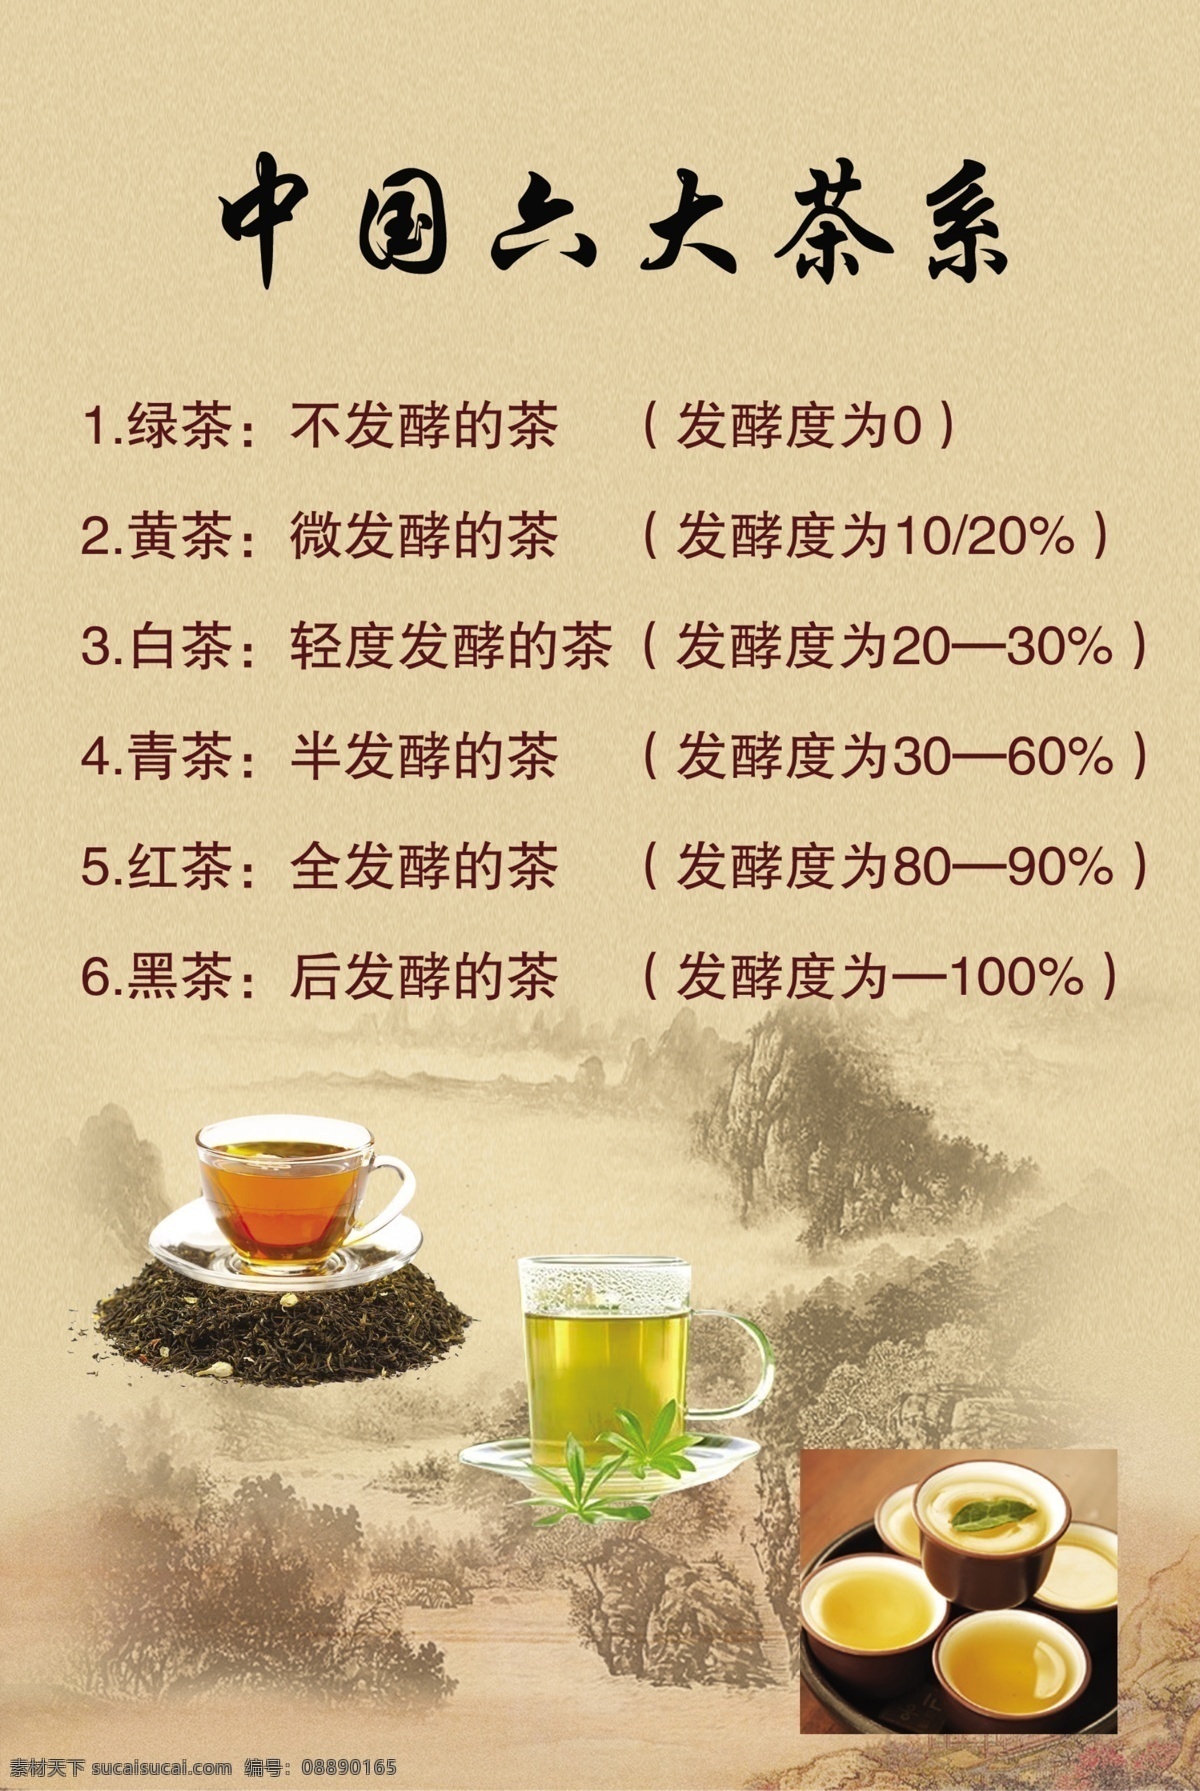 dm宣传单 psd源文件 杯子 茶 广告设计模板 黑茶 喷绘 中国六大茶系 黑茶素材下载 黑茶模板下载 山 养生 海报 写真 源文件 其他海报设计